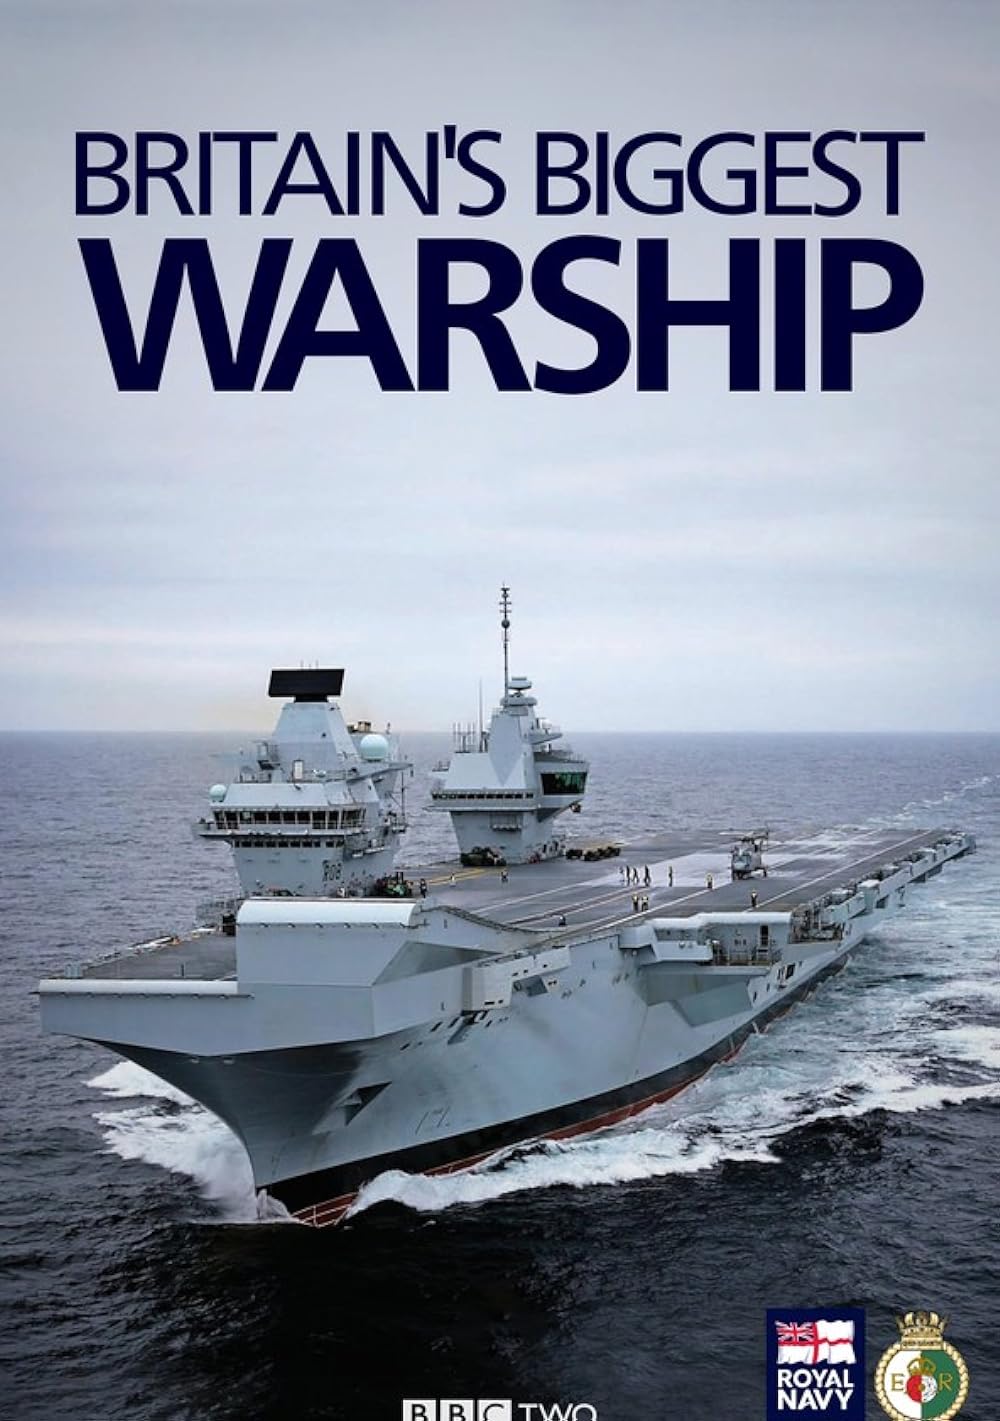 Britain's Biggest Warship